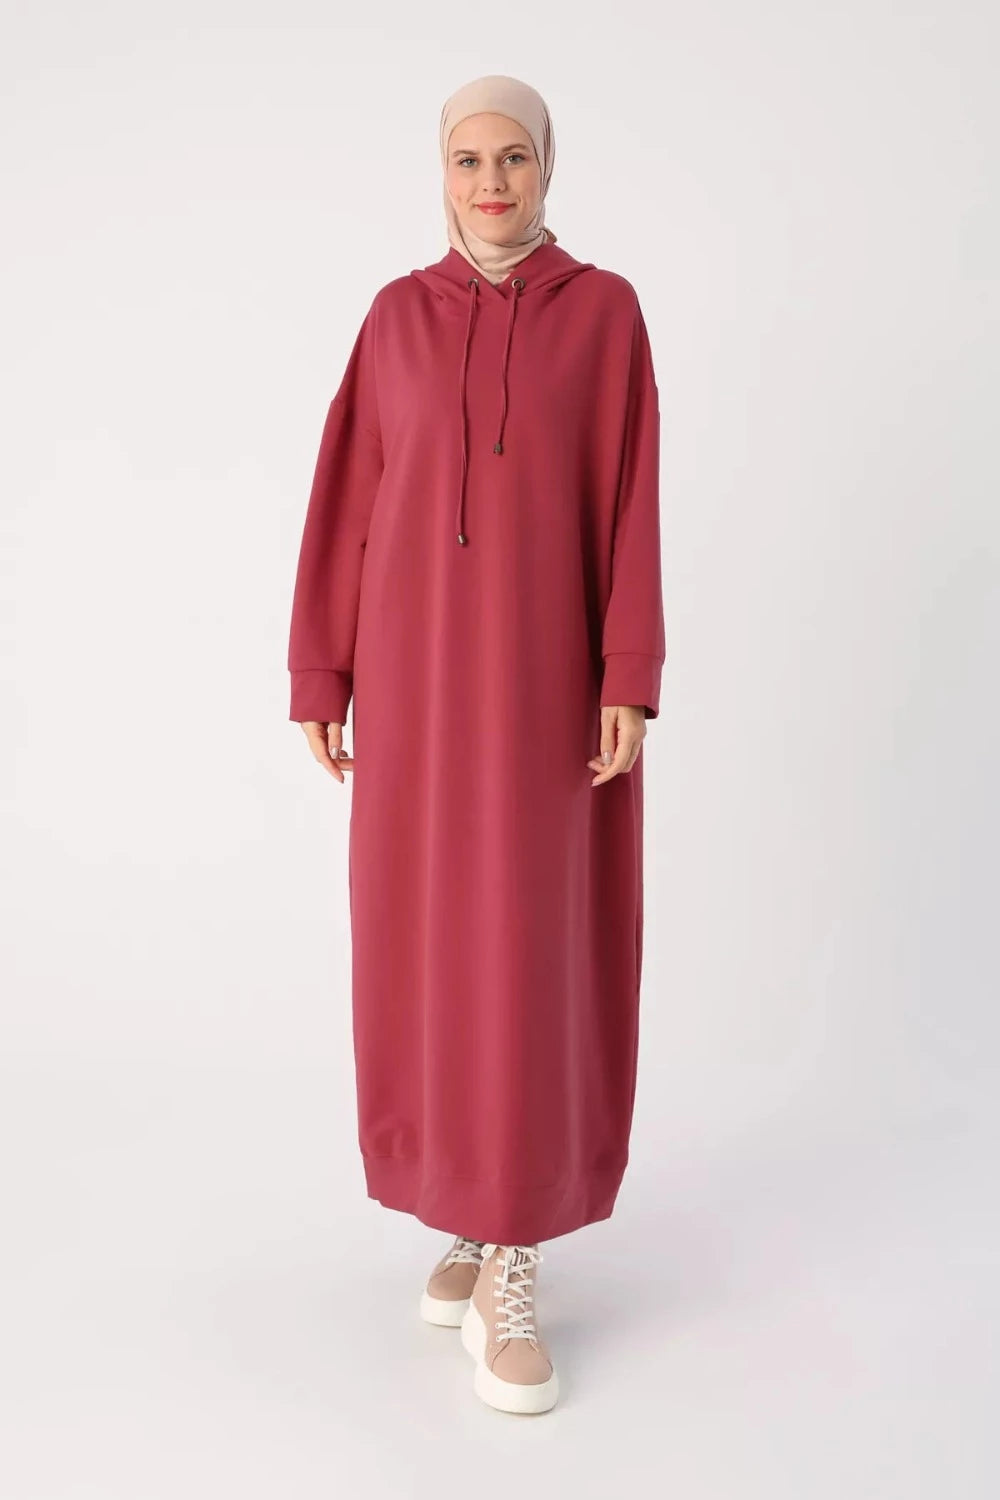 Plus Size Modest Hooded Knitted Dress| Dana Fashion